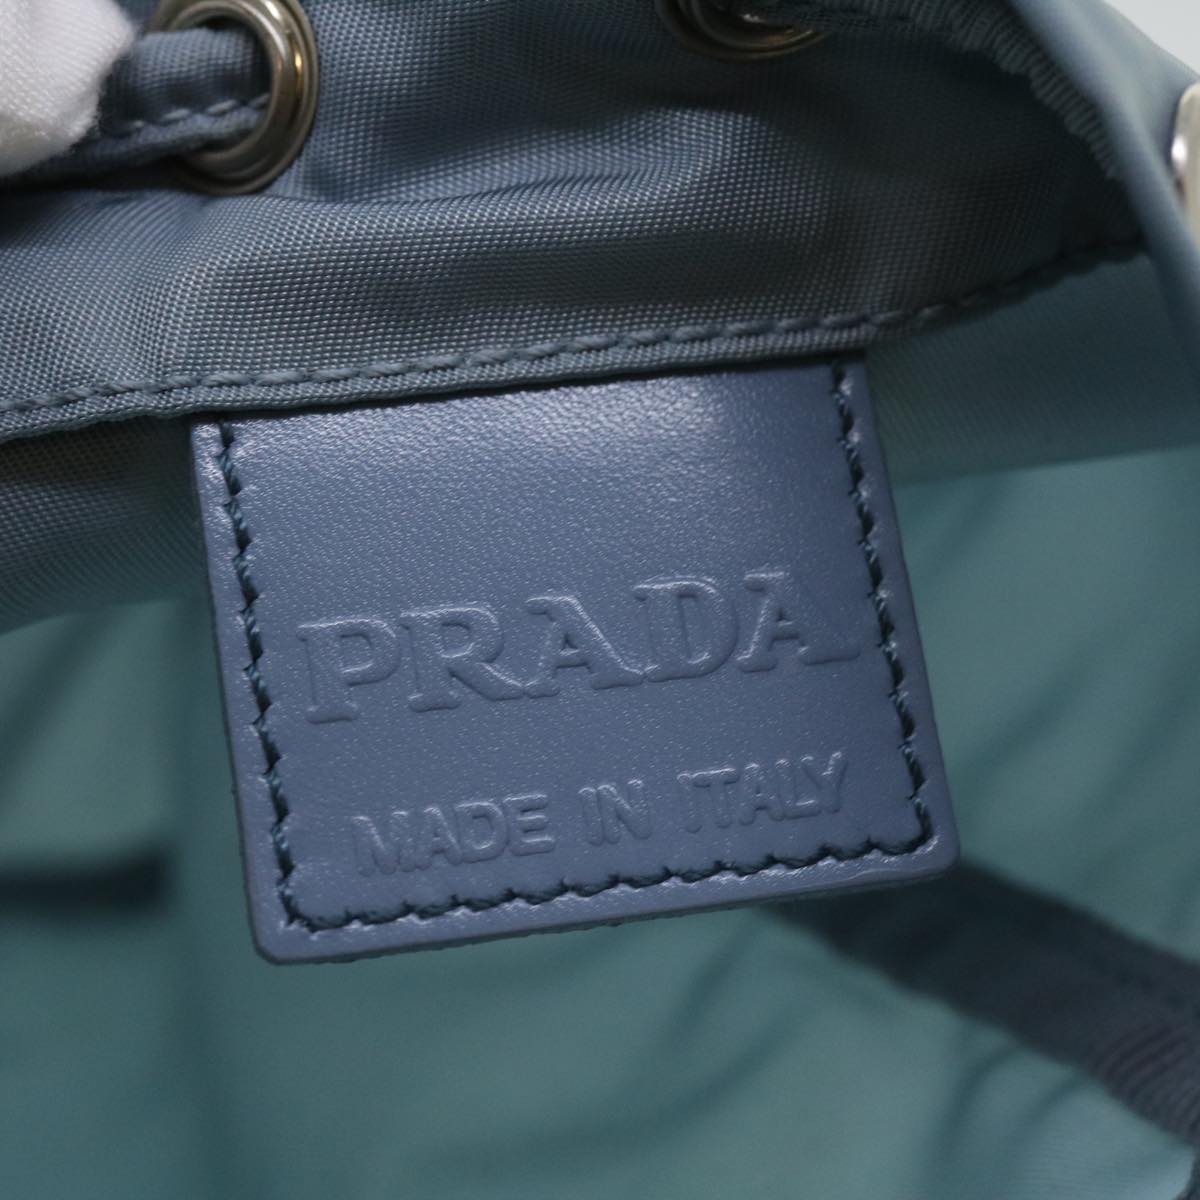 PRADA Drawstring Bag Pouch Nylon Light Blue Auth 52247